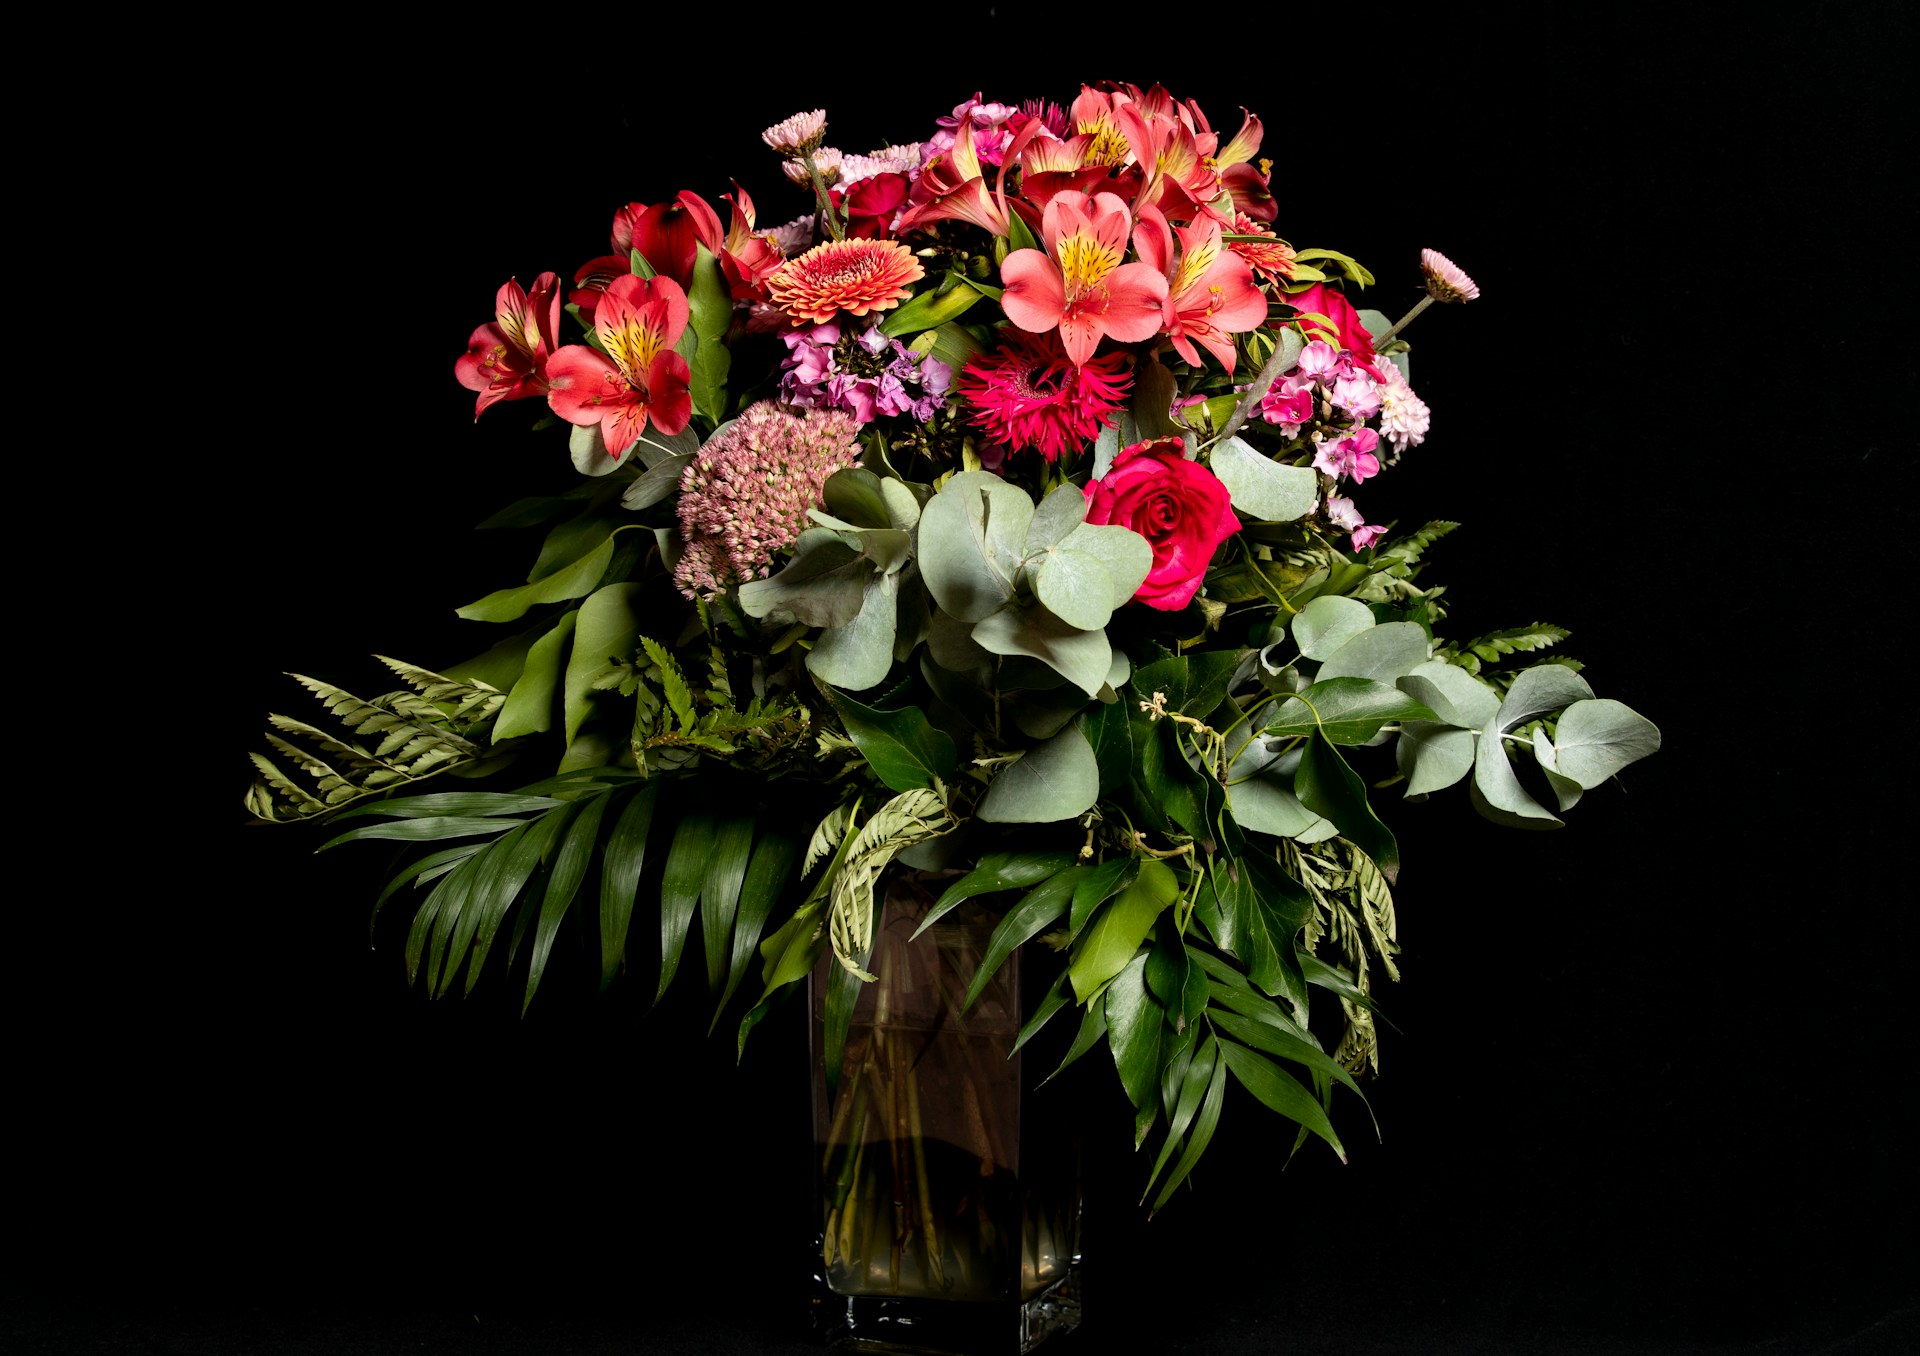 A floral arrangement in a vase